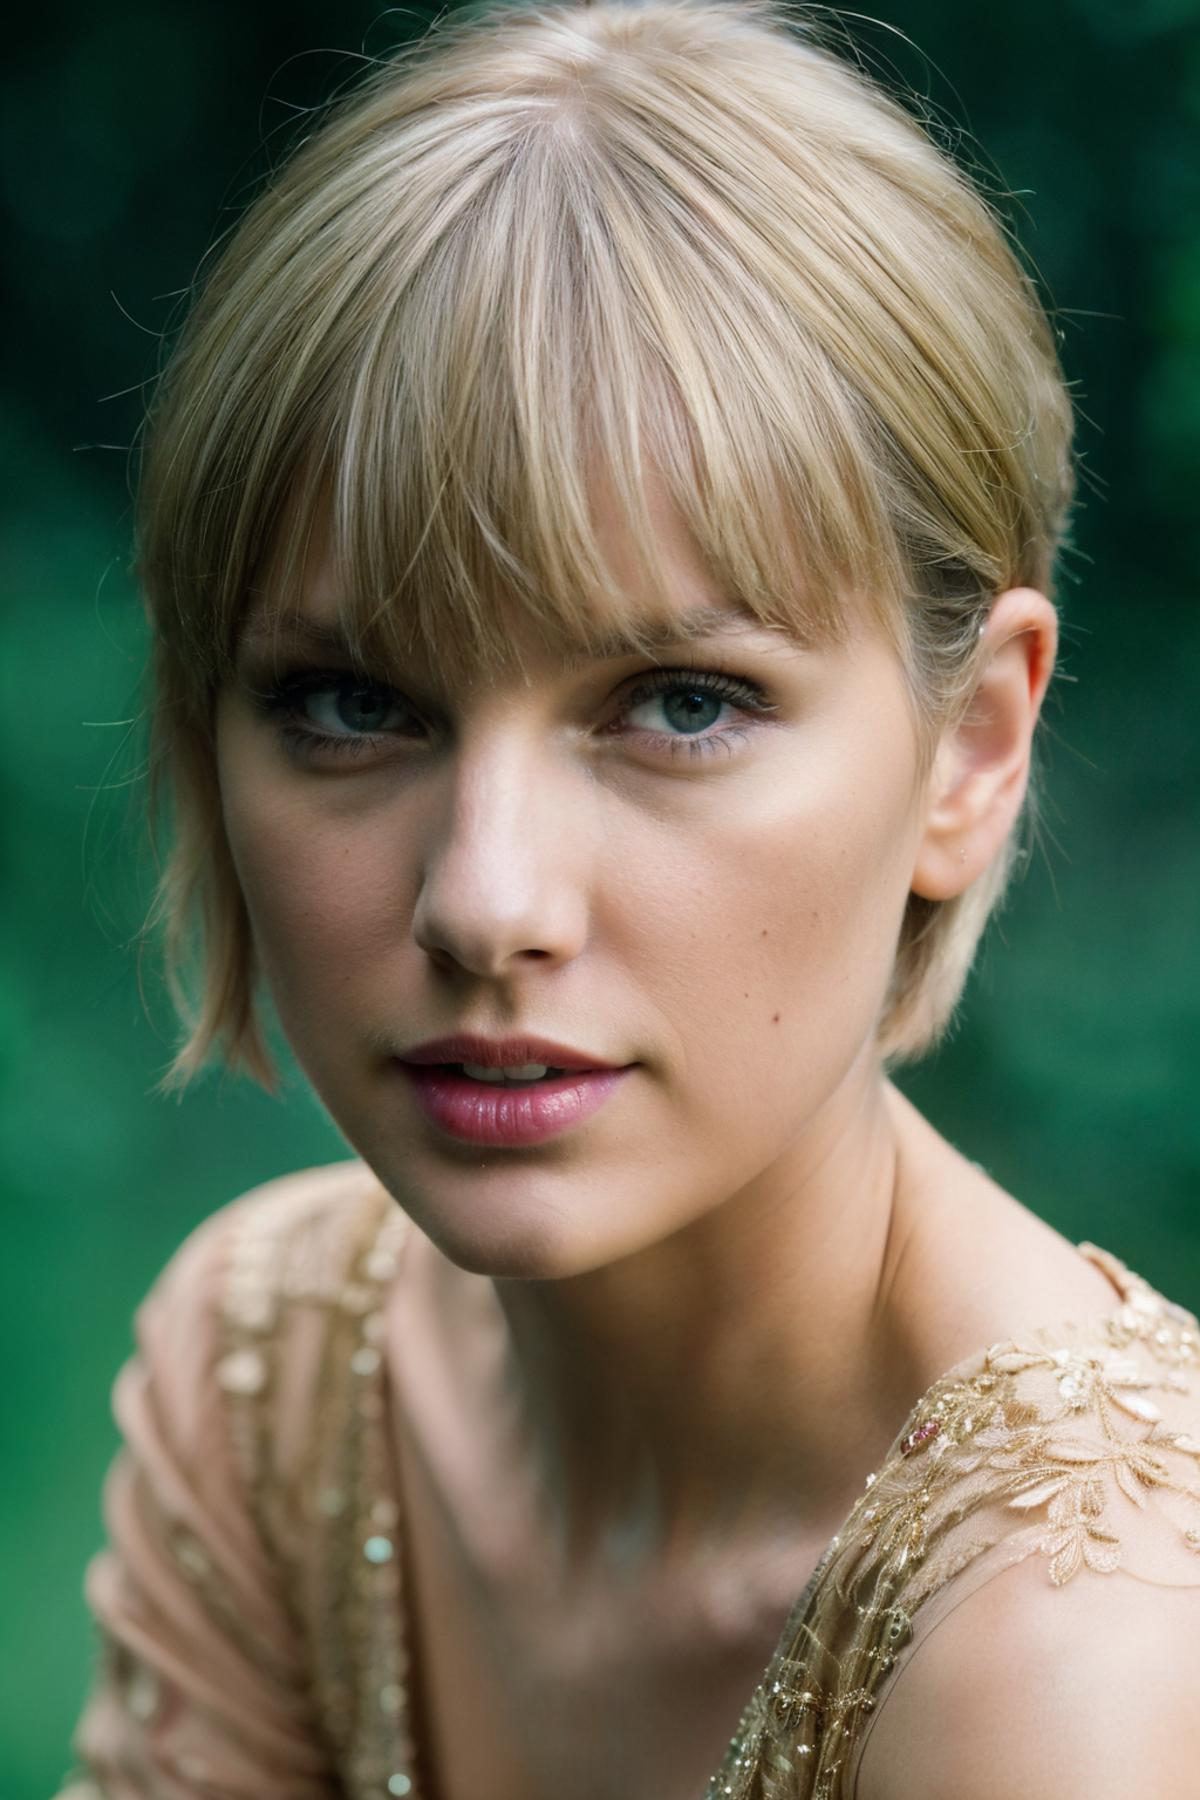 Taylor Swift image by frankyfrank2k